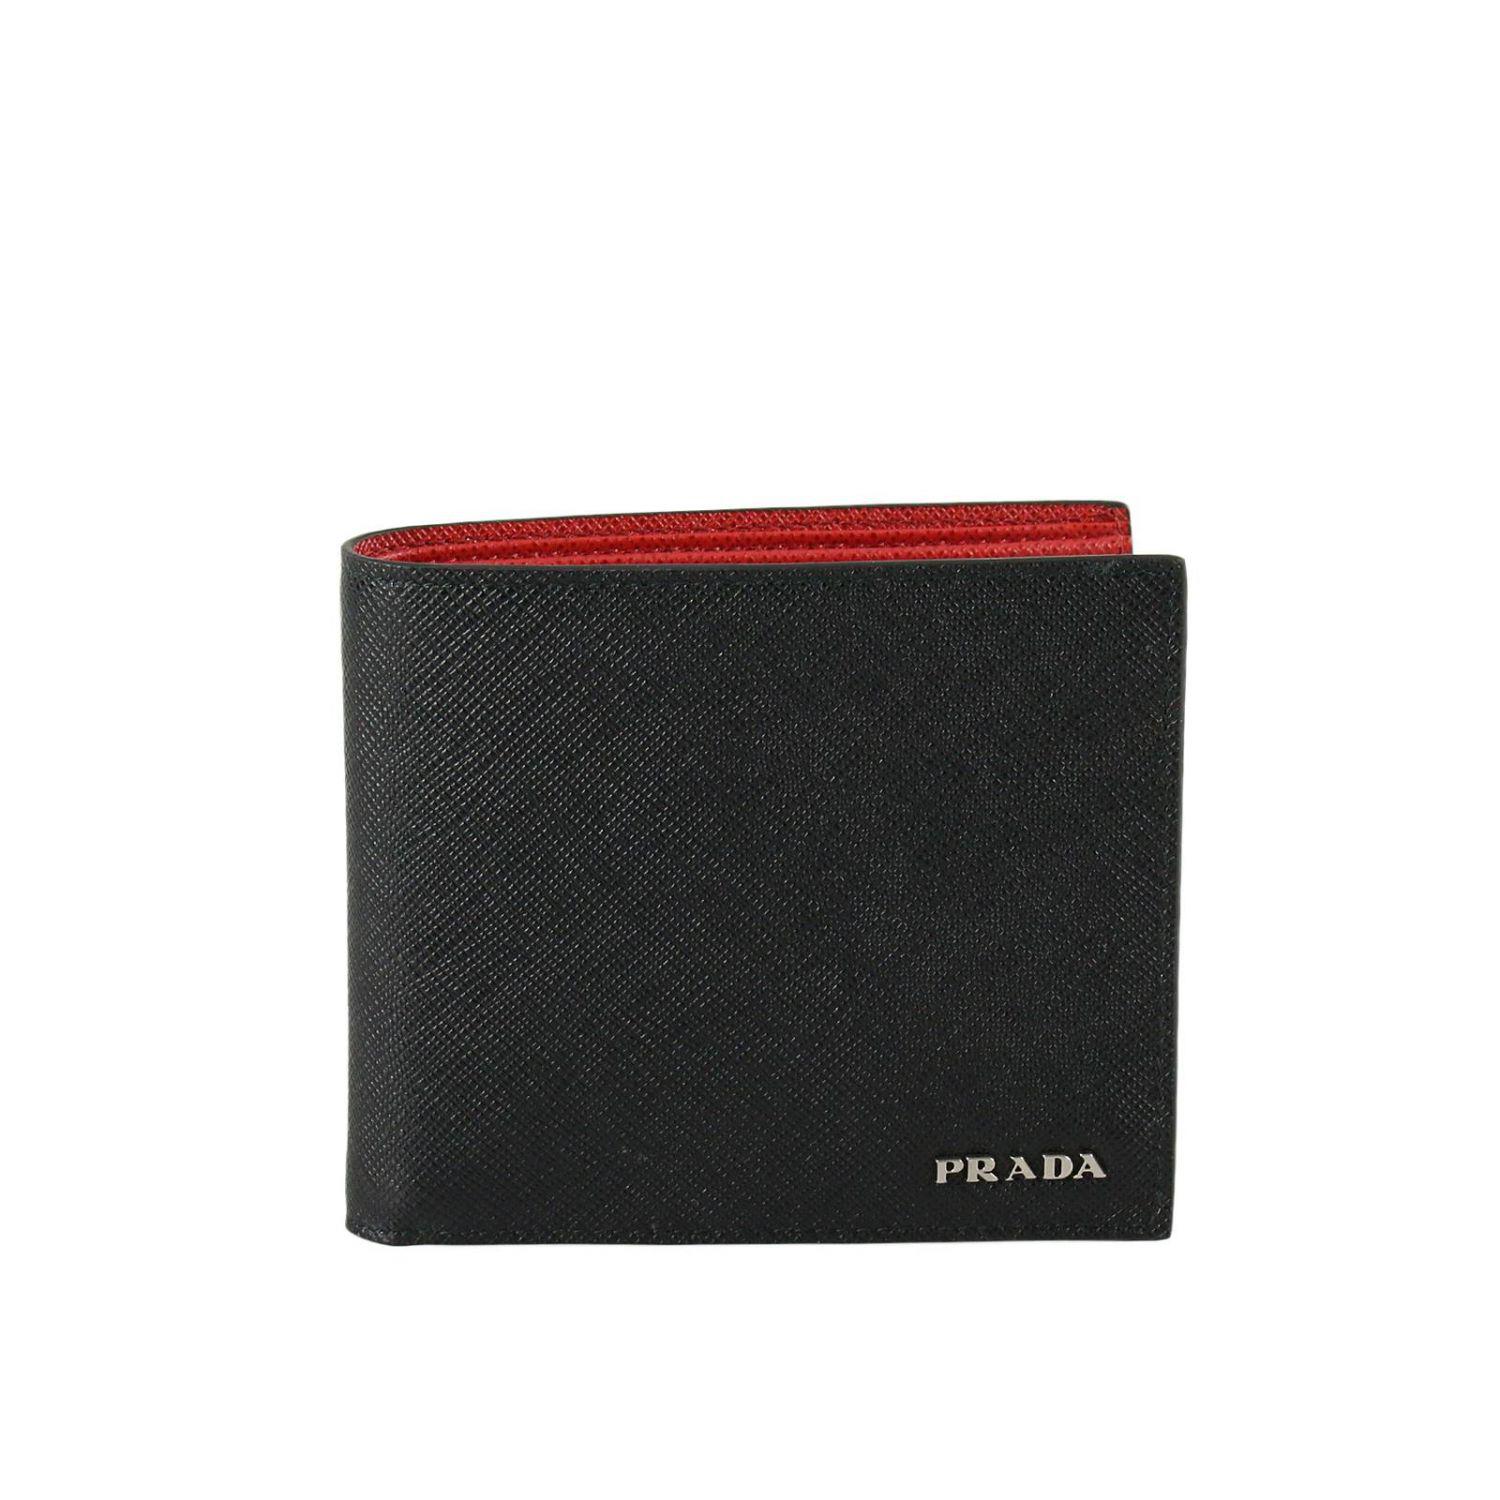 Prada Leather Wallet Men in Black for Men - Lyst